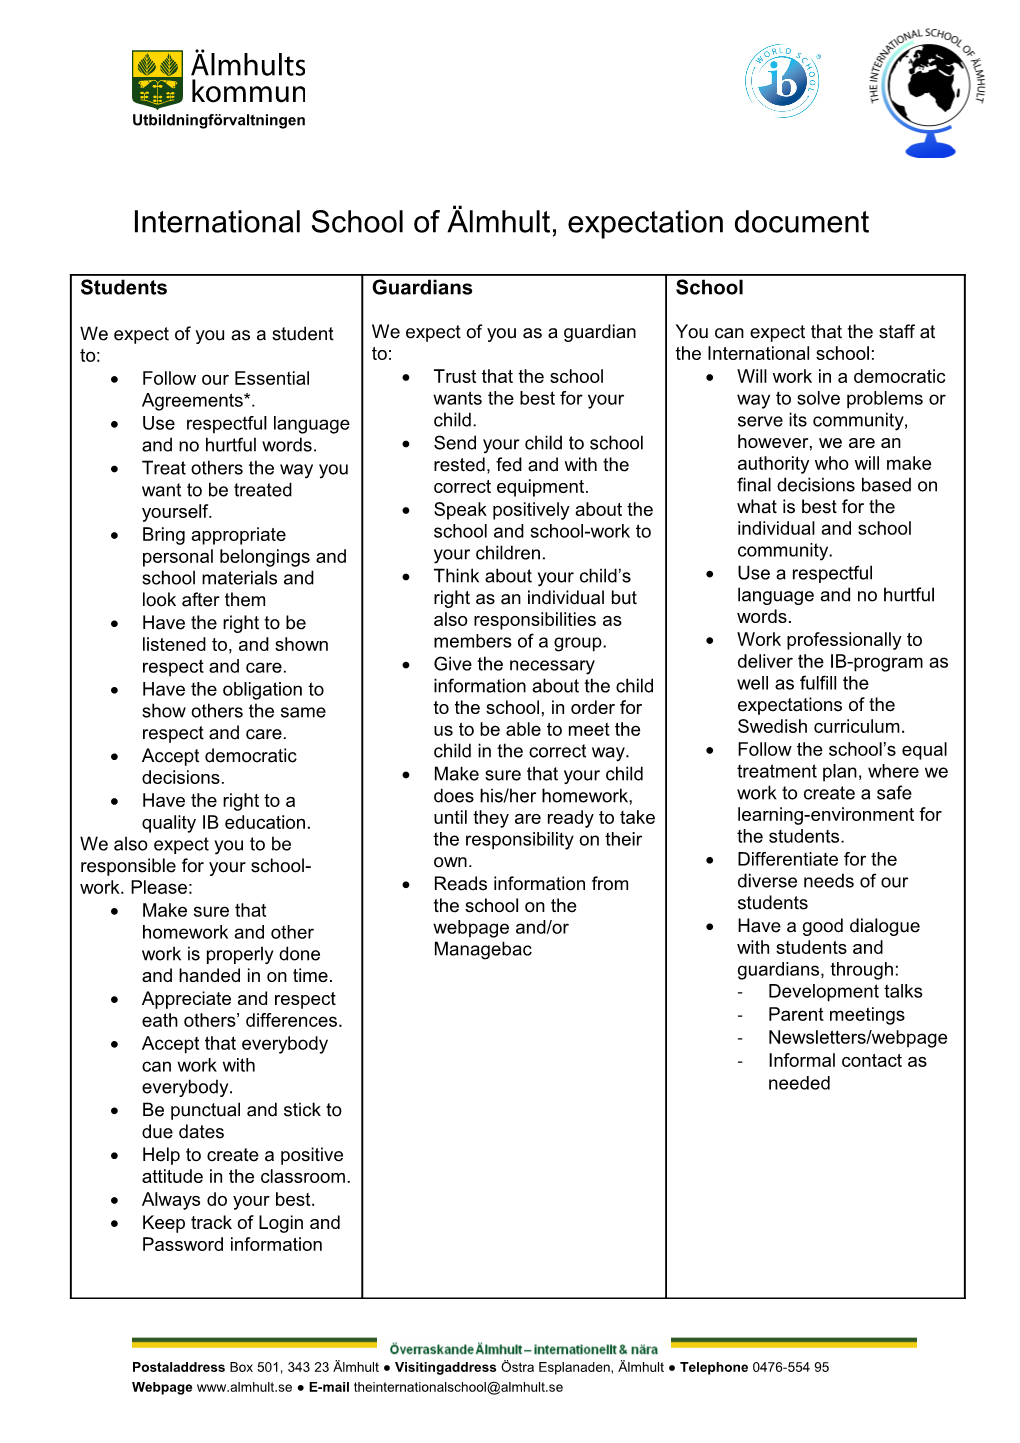 International School of Älmhult, Expectation Document